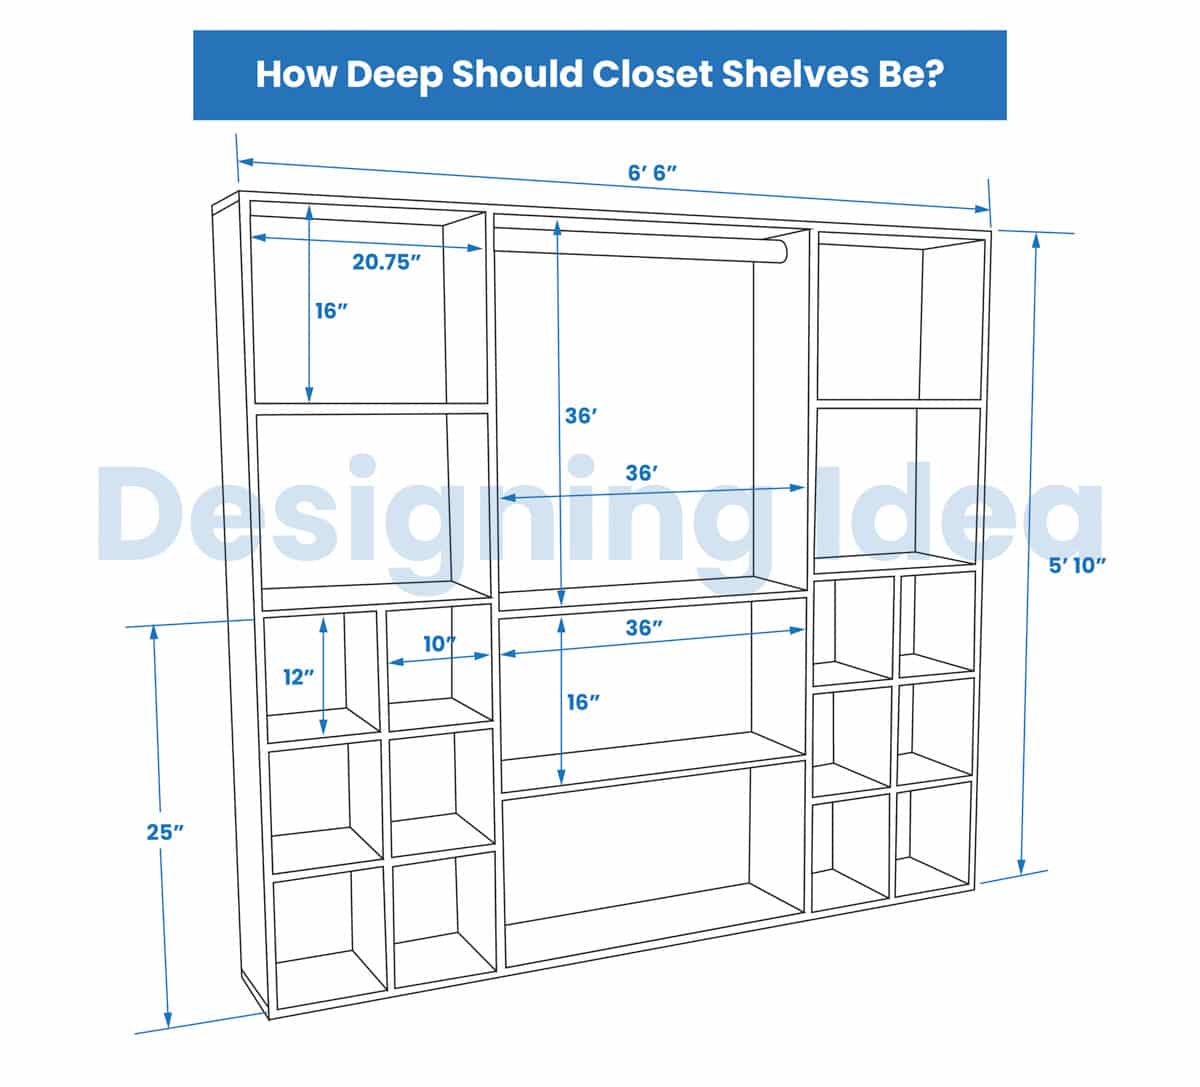 How Deep Should Closet Shelves Be